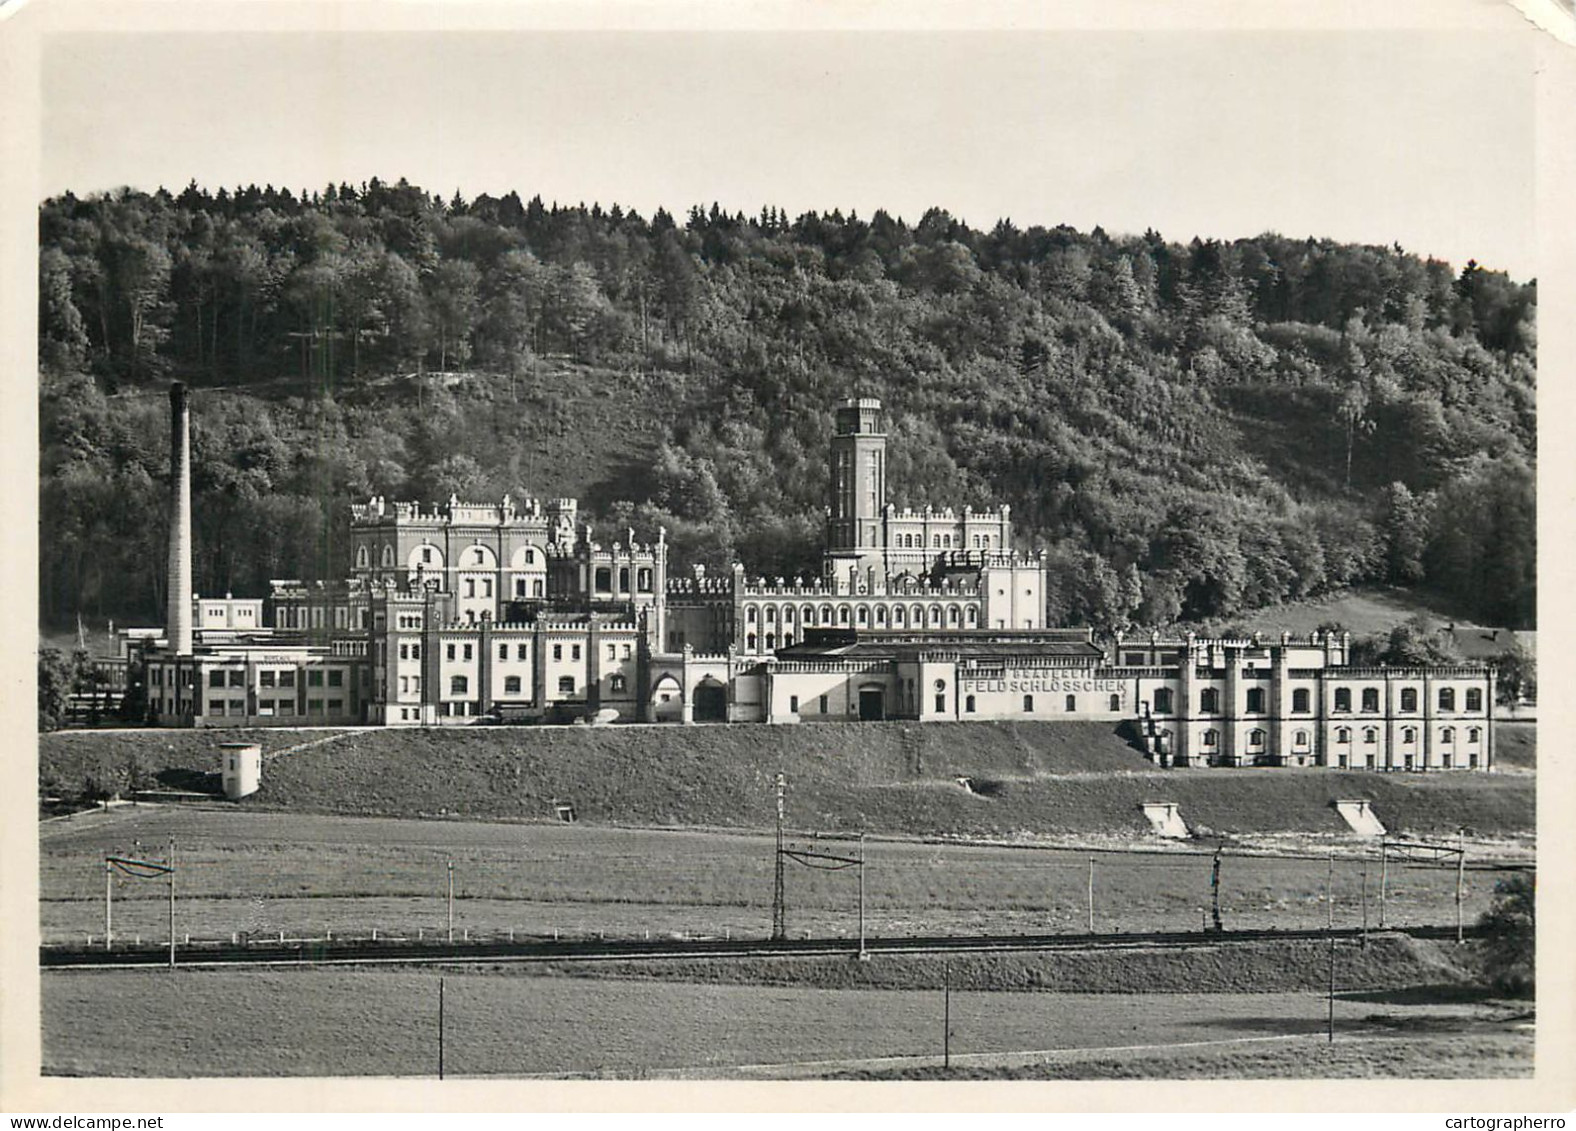 Postcard Switzerland Brauerei Feldschlosschen Rheinfelden - Other & Unclassified